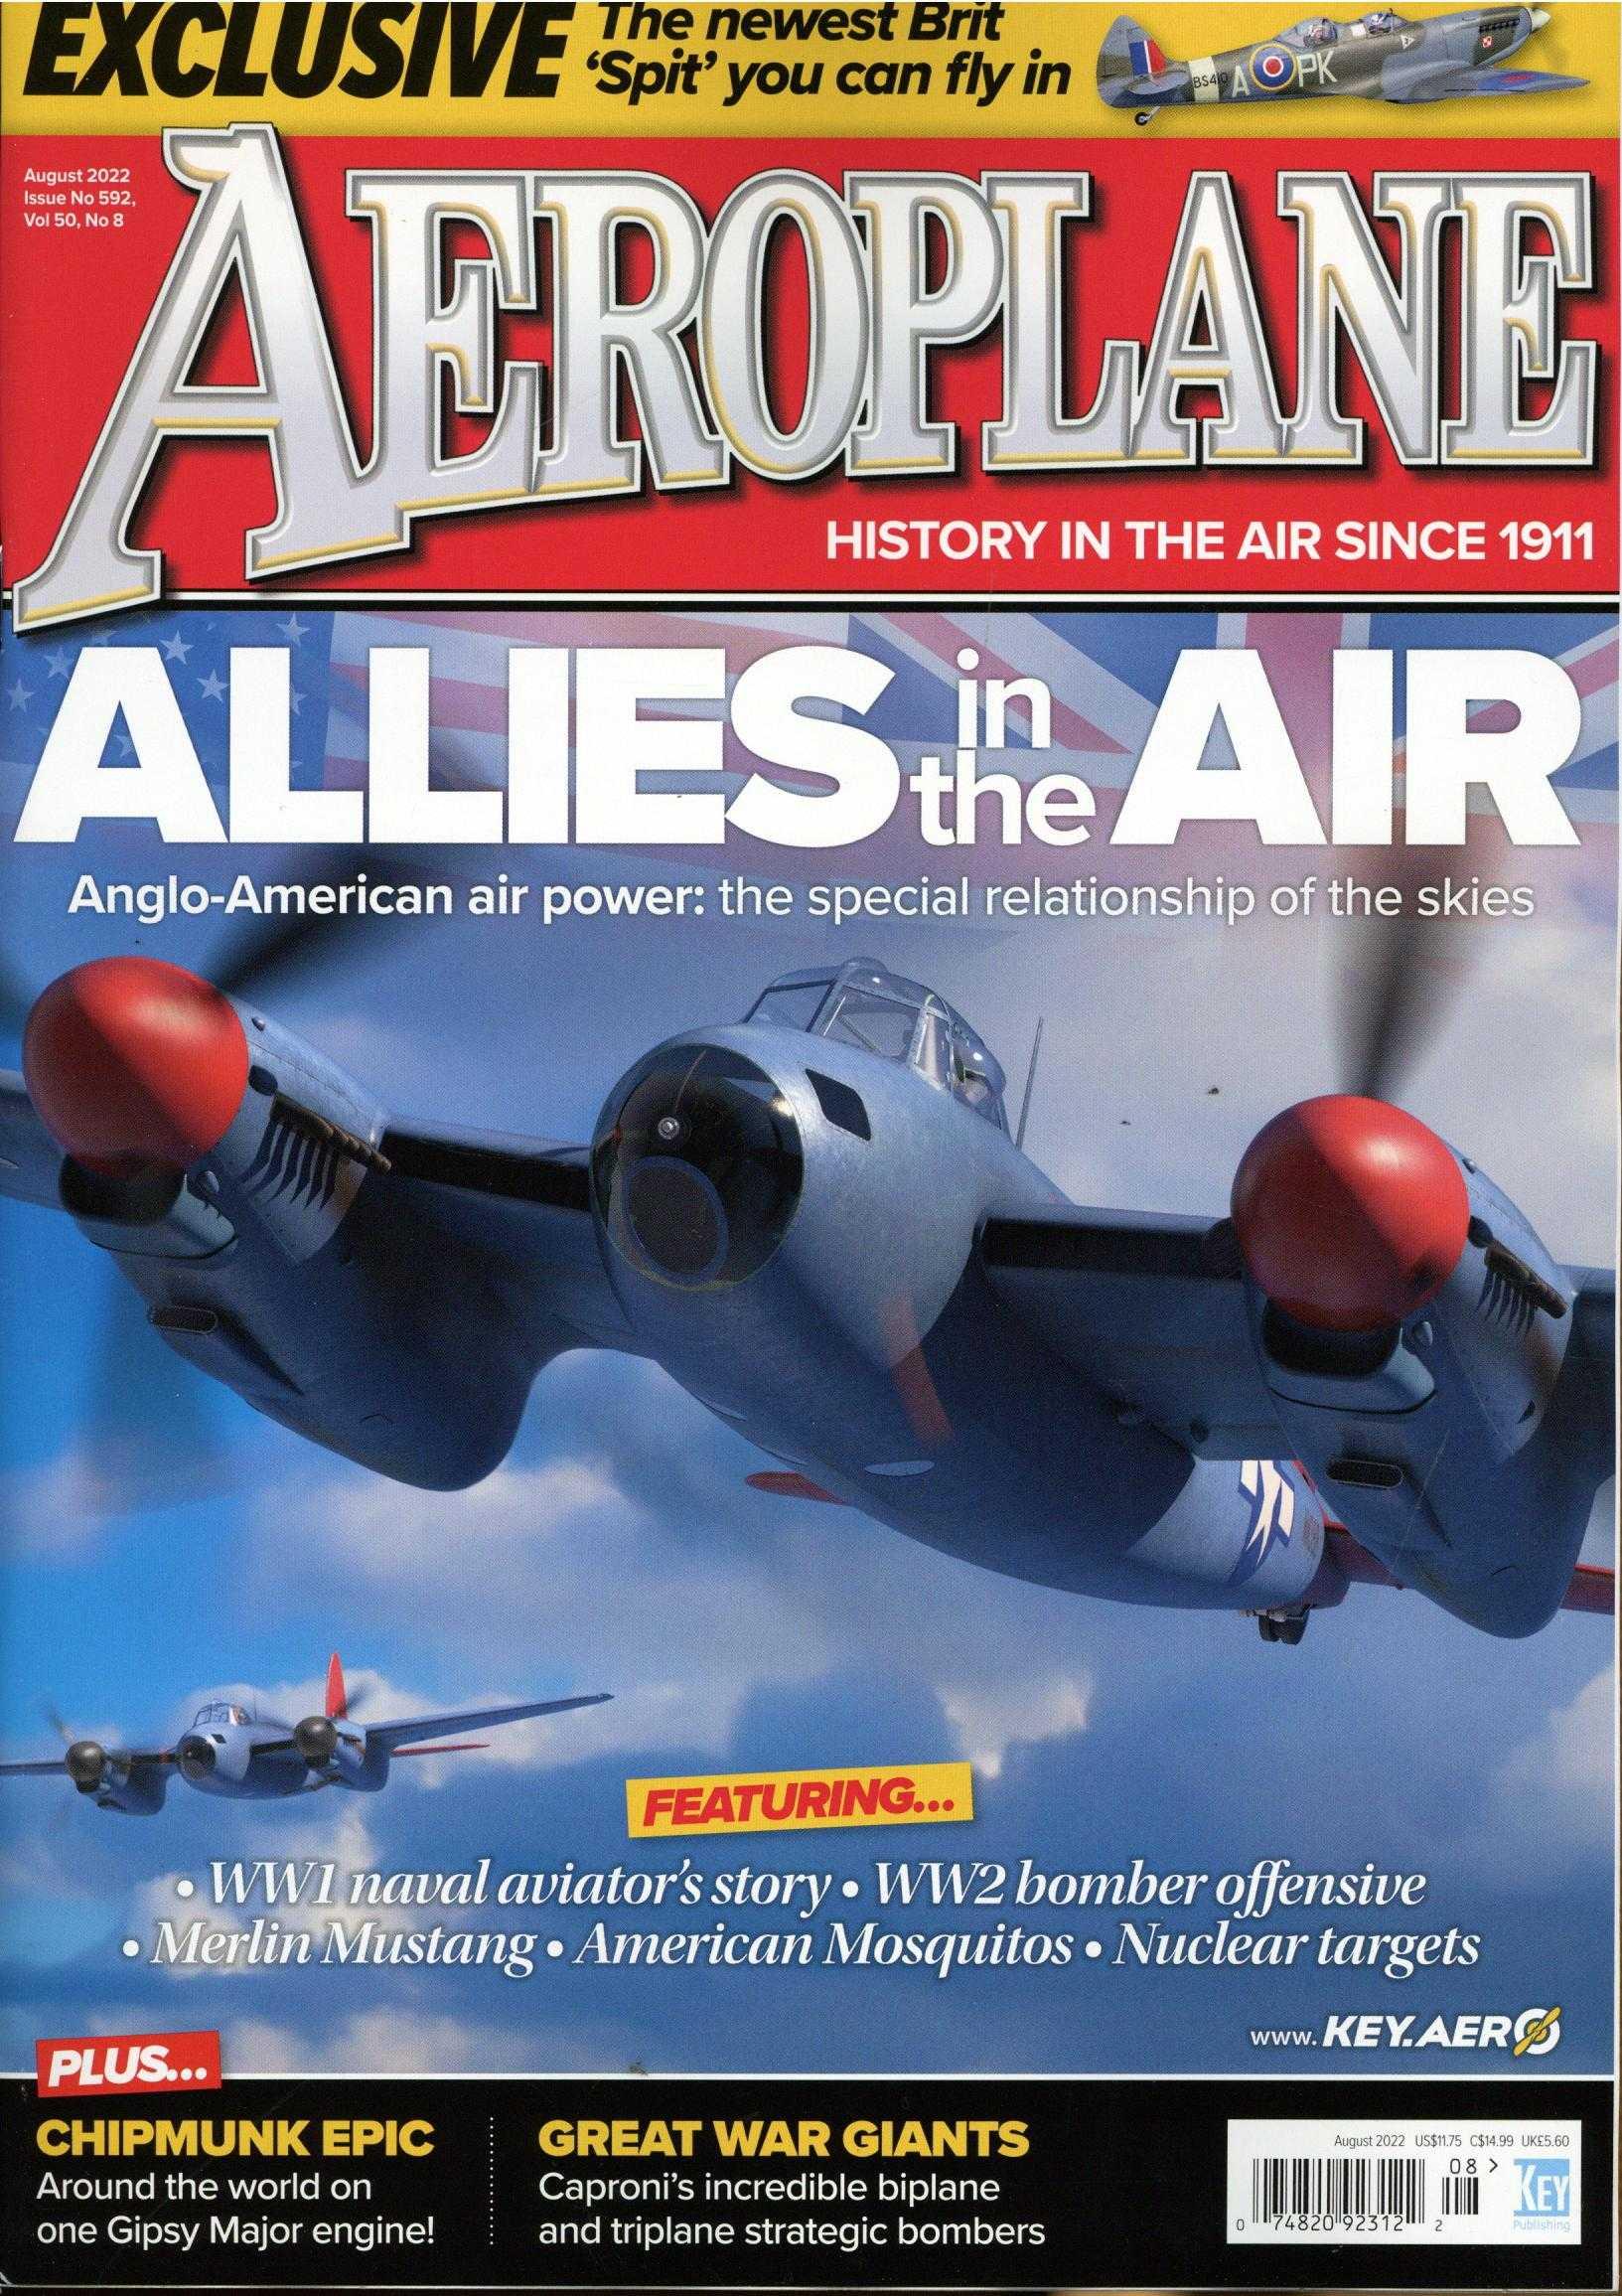 Aeroplane Monthly